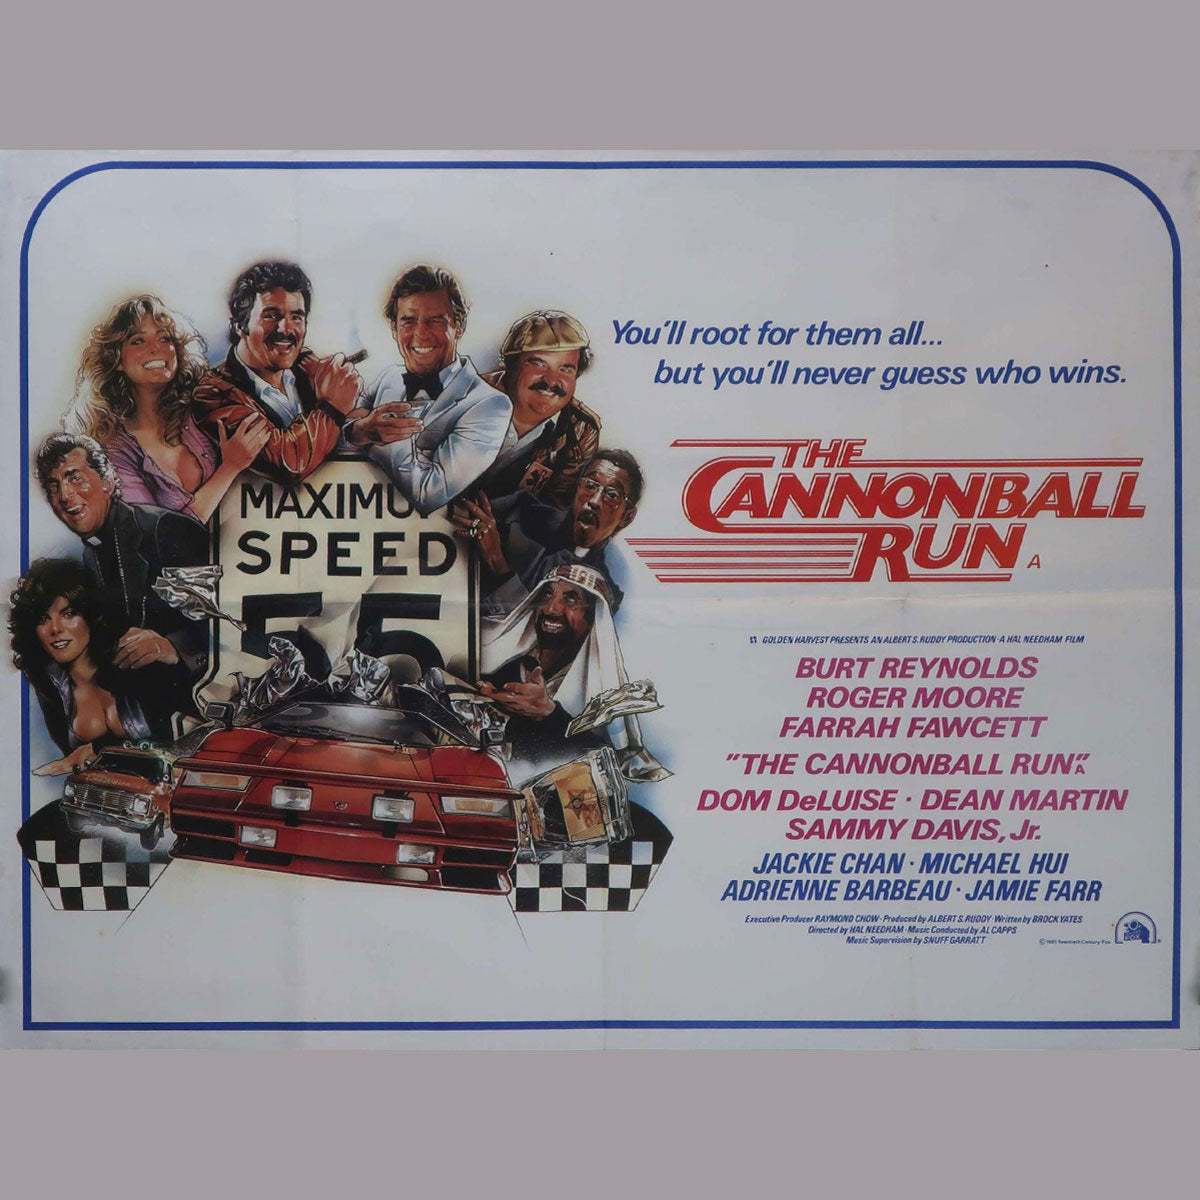 Cannnonball Run, The (1981)